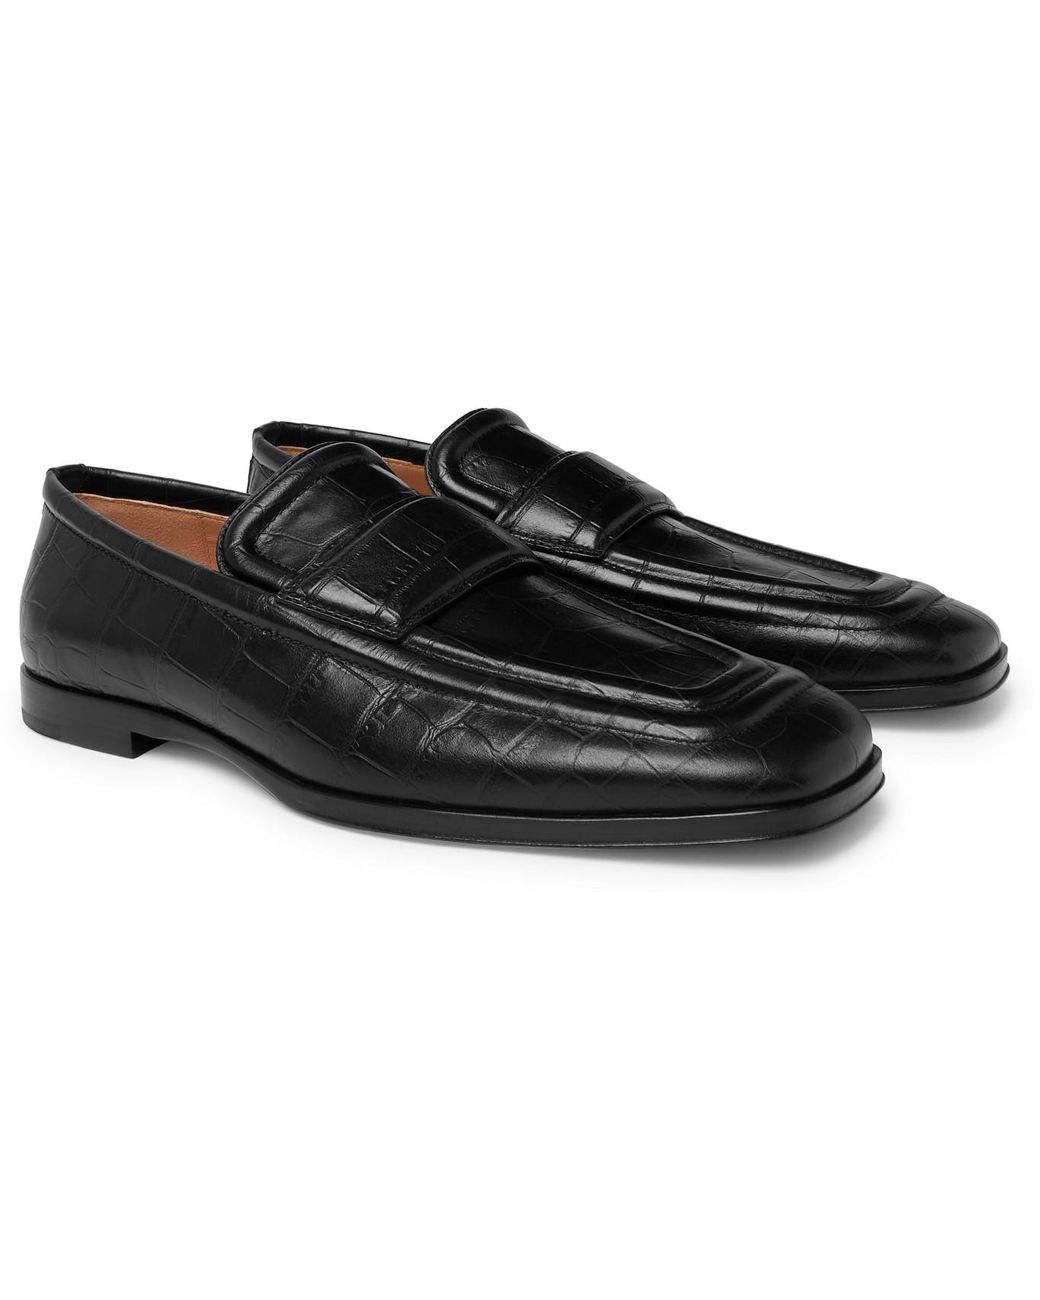 Bottega Veneta Croc-effect Leather Loafers in Black for Men - Lyst